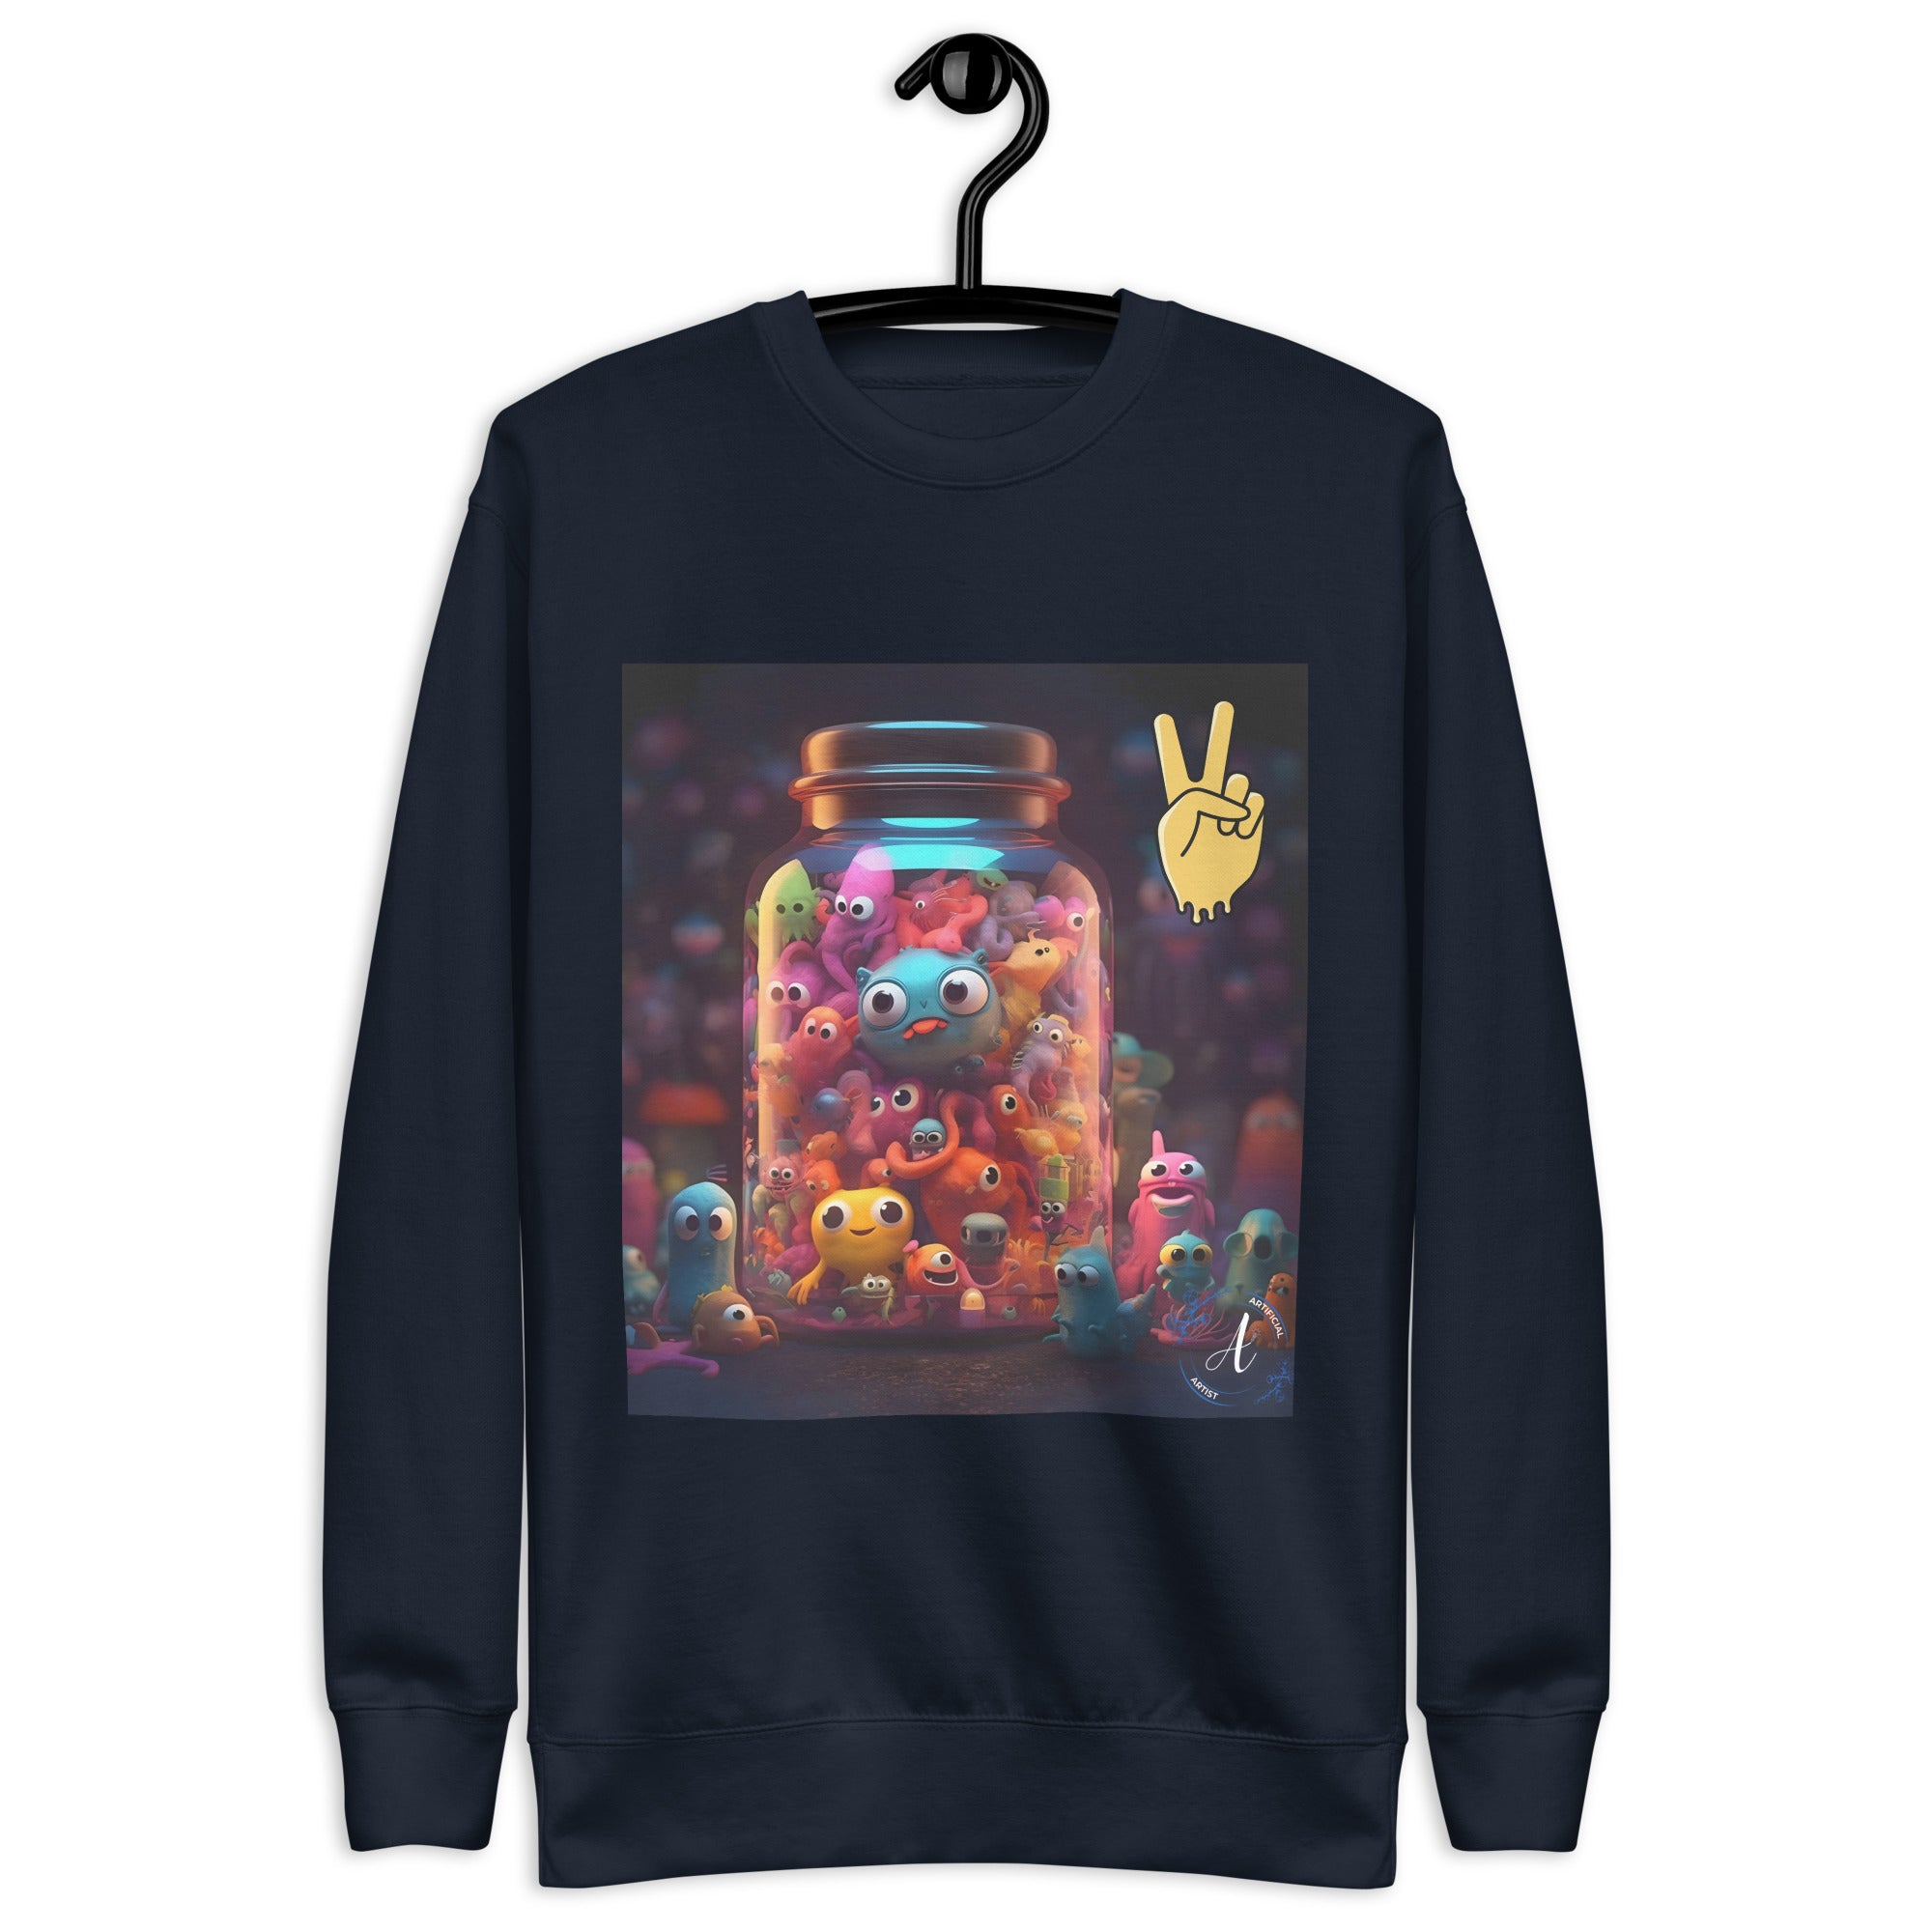 Jar of Friends - Premium Sweatshirt